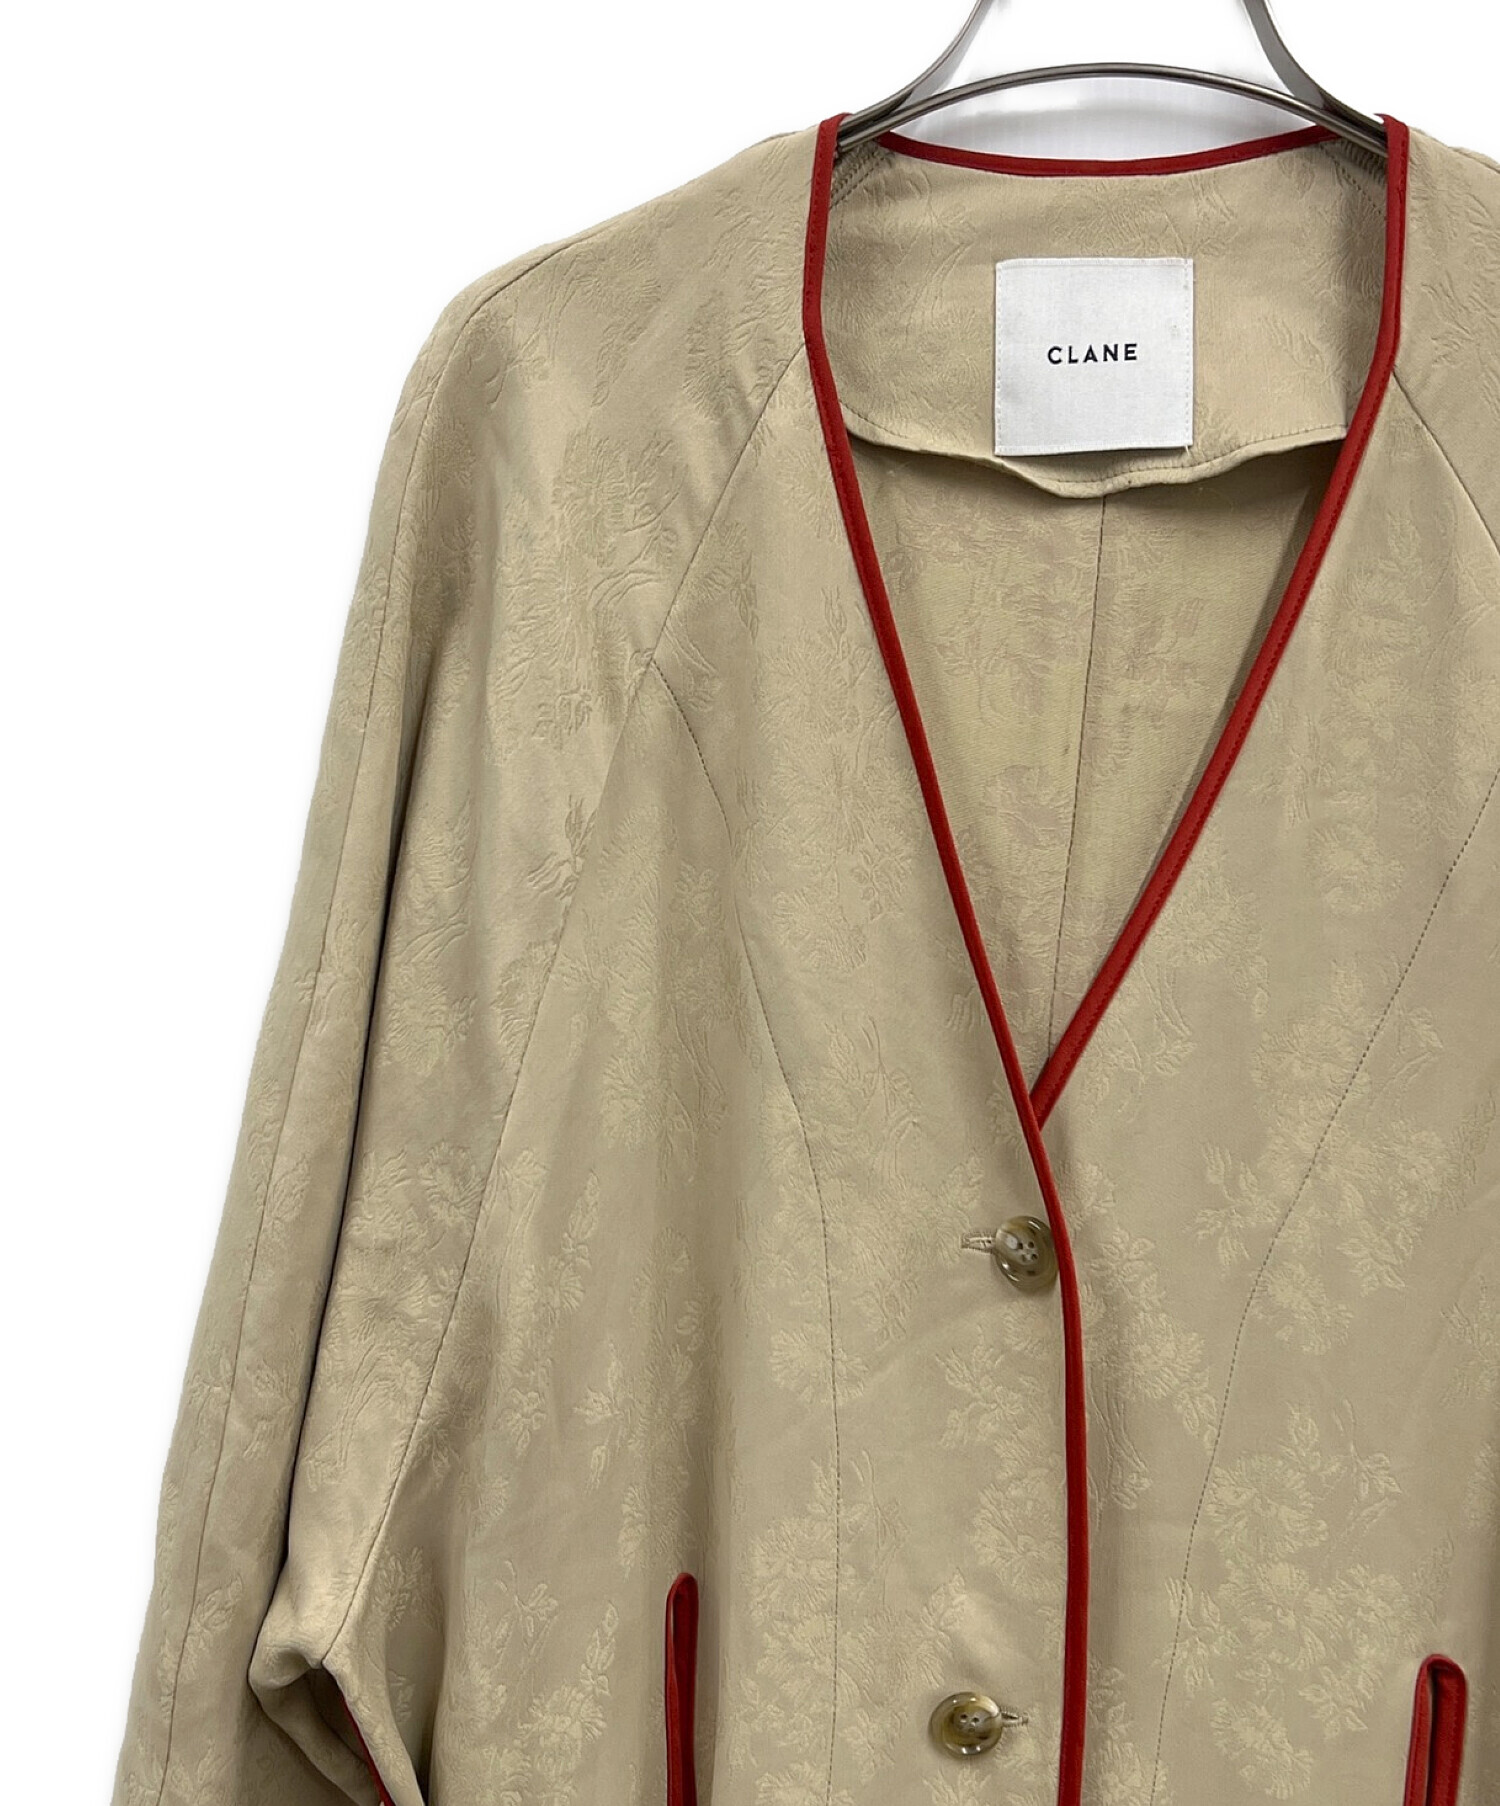 CLANE (クラネ) BOTANICALS JACQUARD DRESS COAT ベージュ サイズ:1